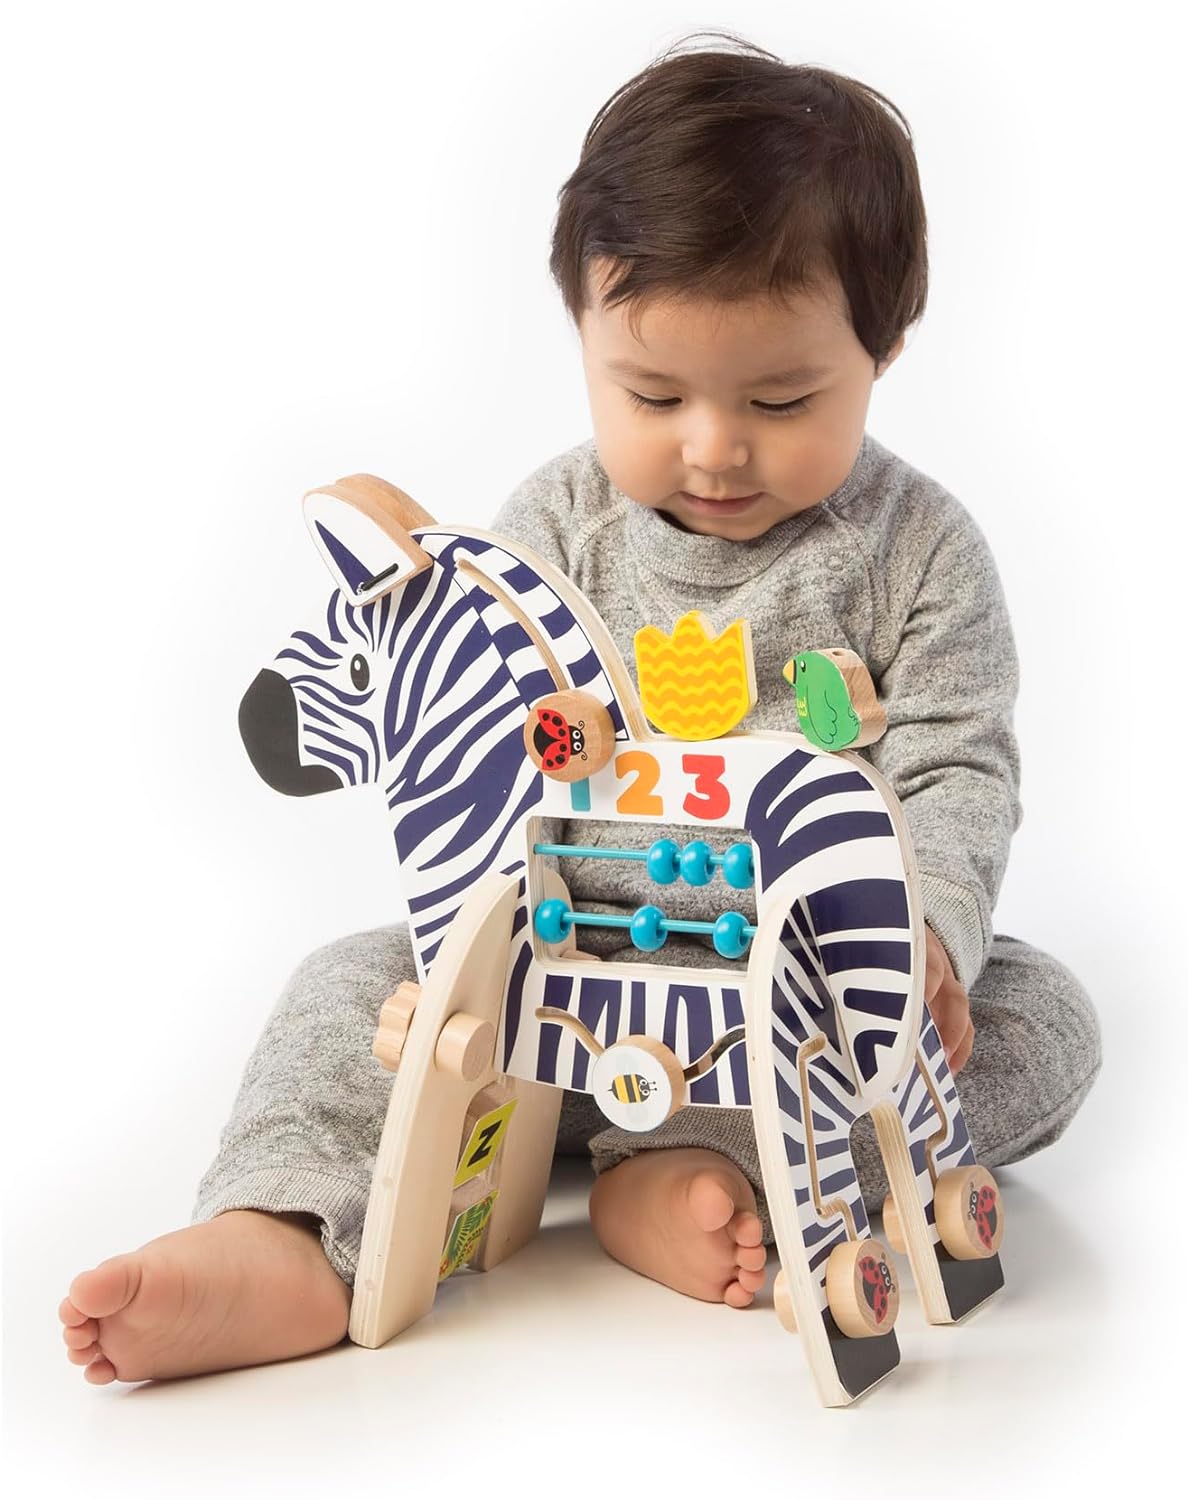 Safari Zebra Wooden Toddler Activity Toy